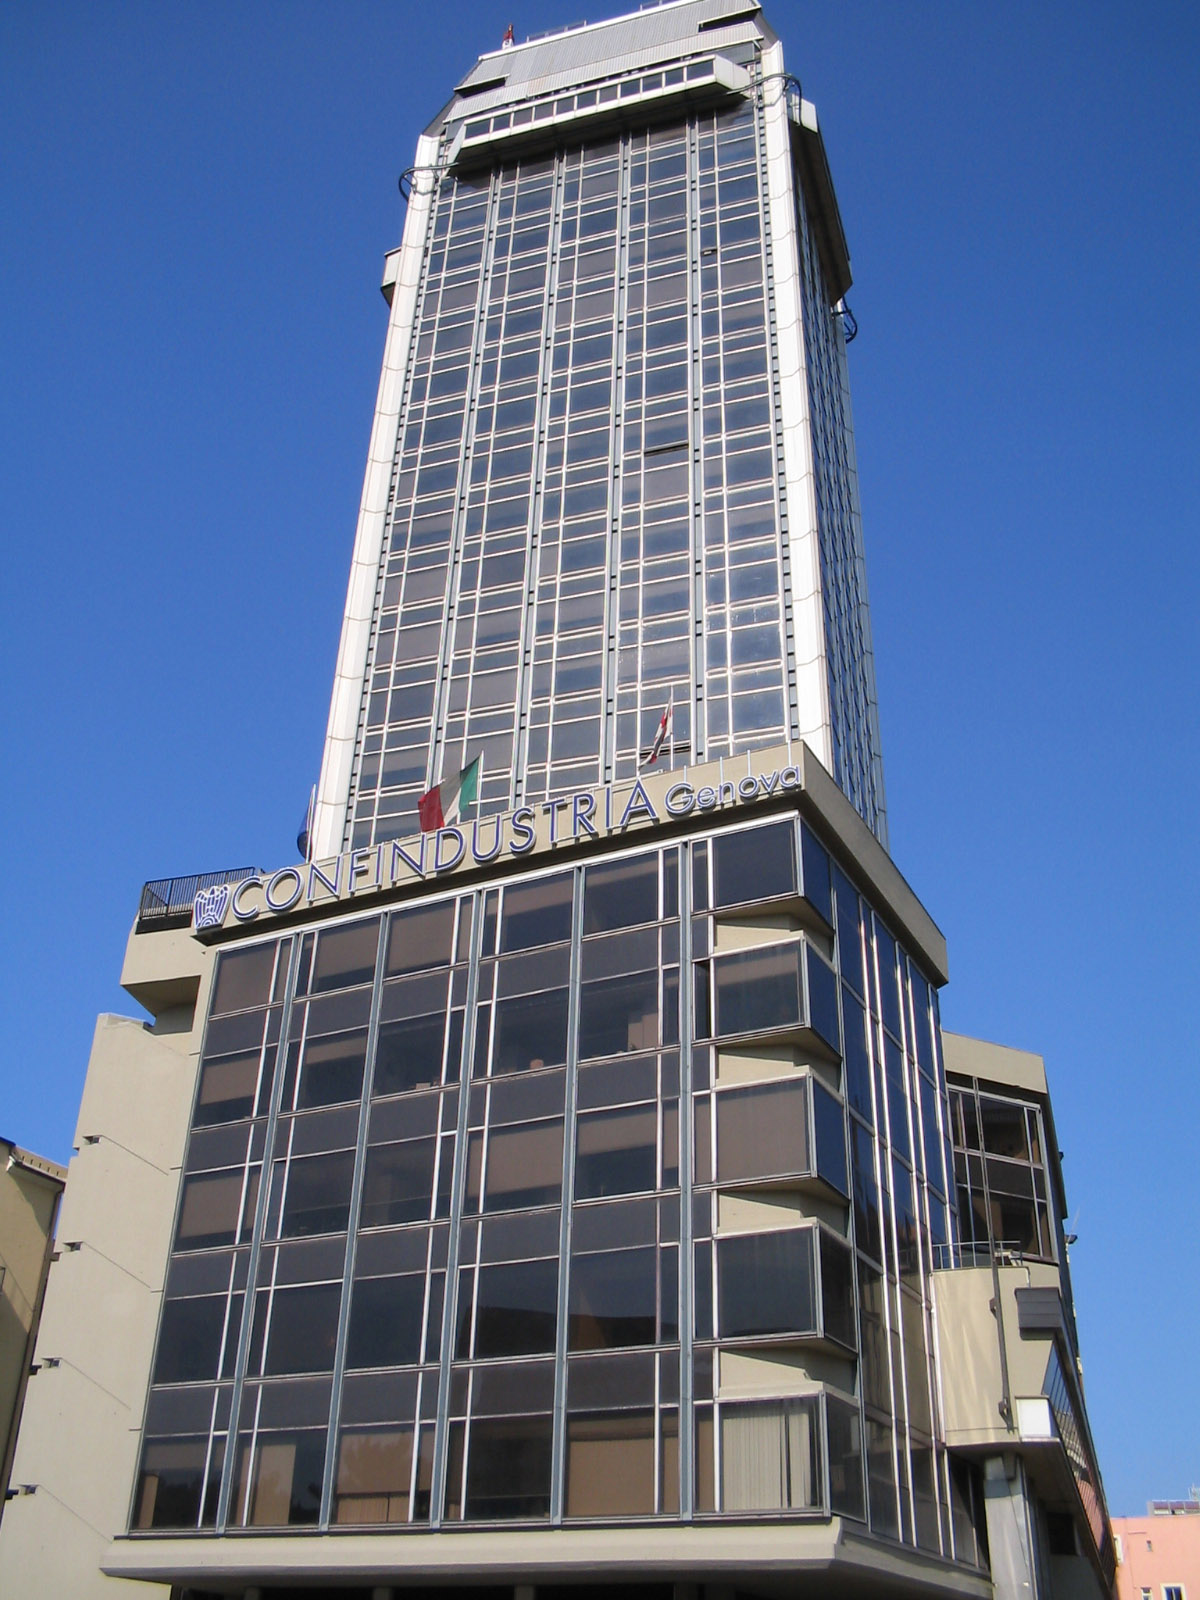 grattacielo confindustria